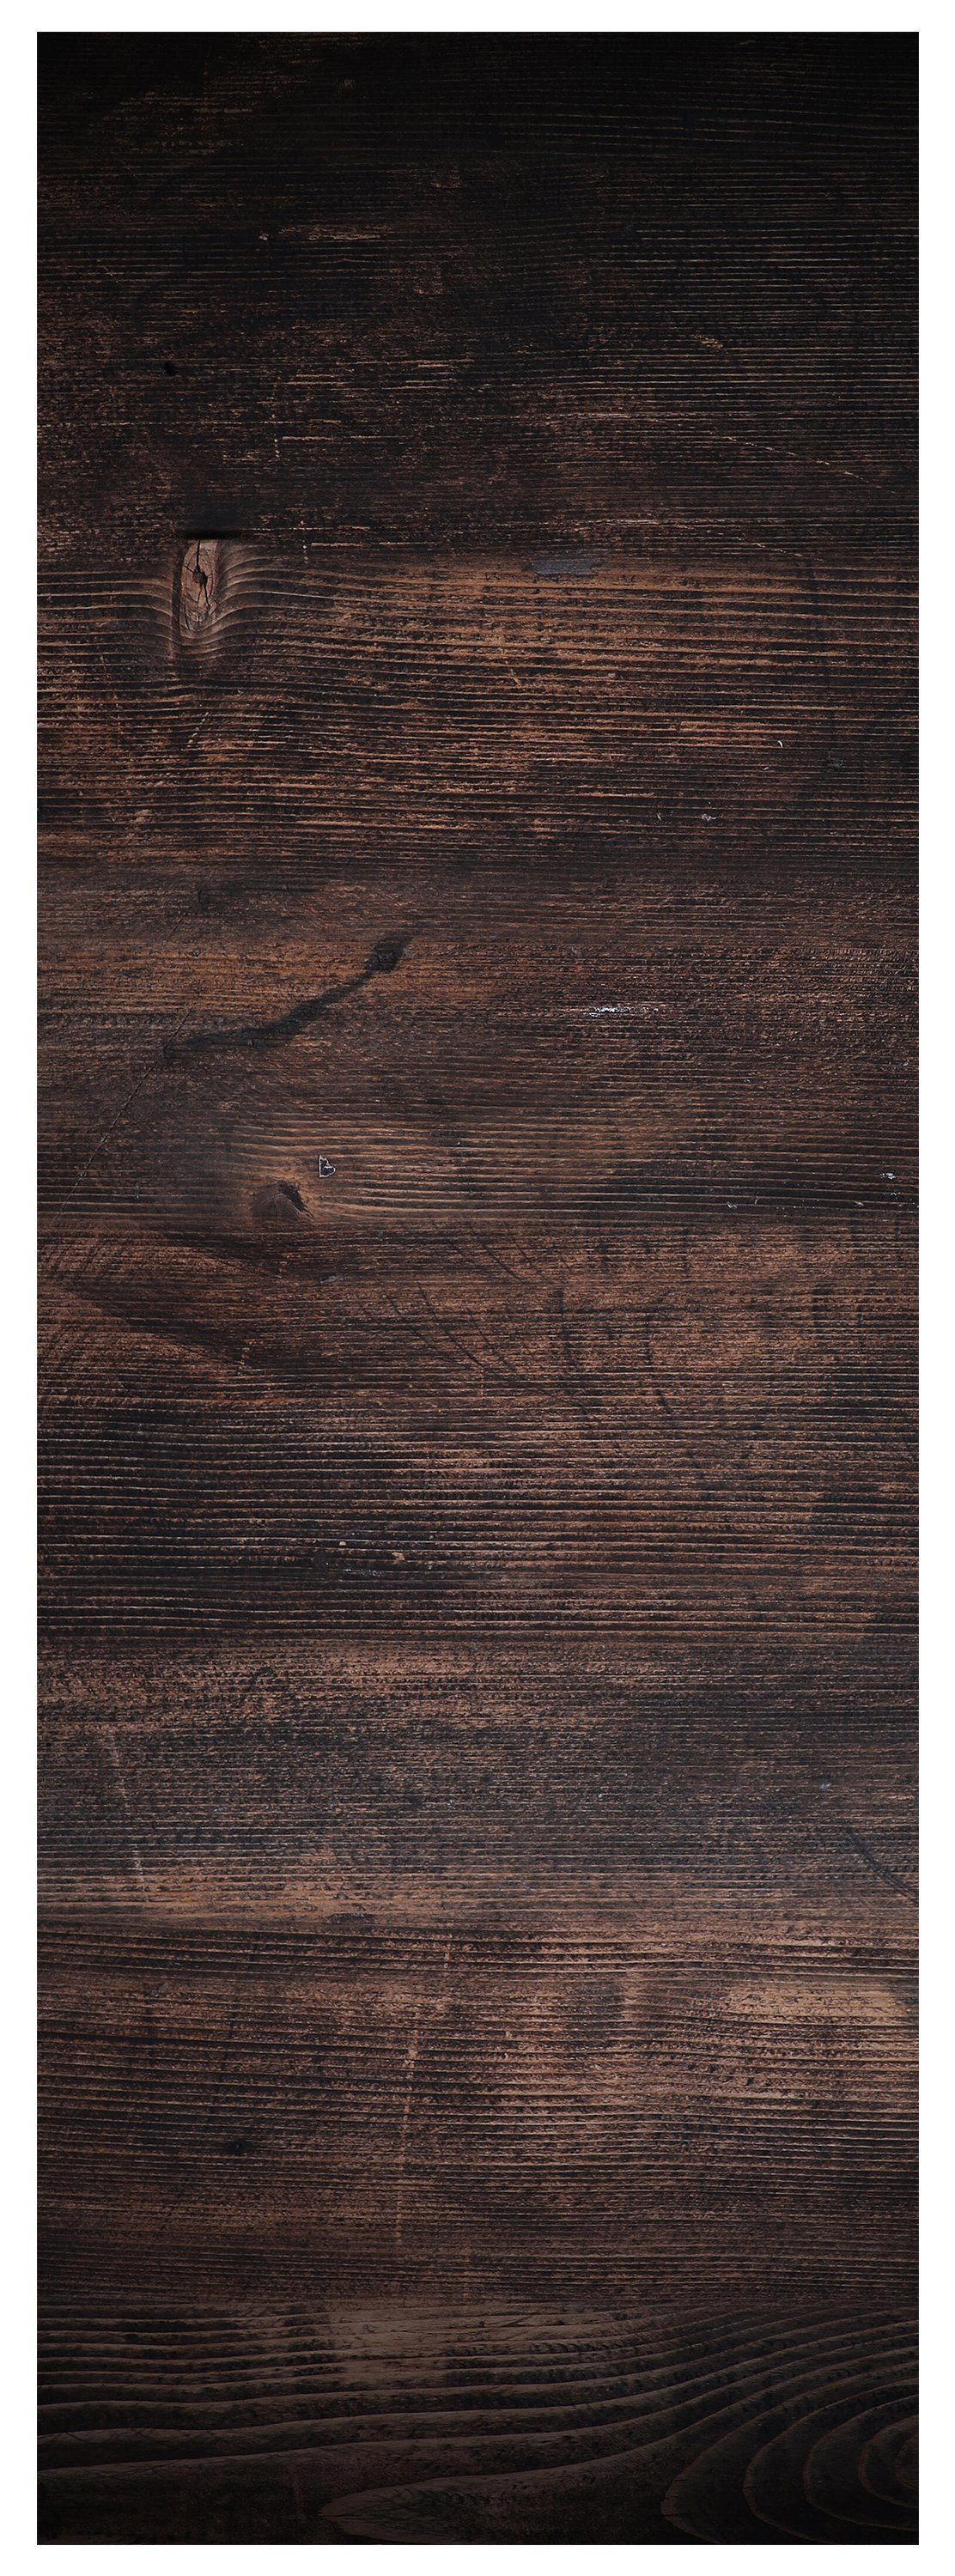 wandmotiv24 Türtapete rustikale Holzwand, dunkles Holz, Braun, glatt,  Fototapete, Wandtapete, Motivtapete, matt, selbstklebende Dekorfolie